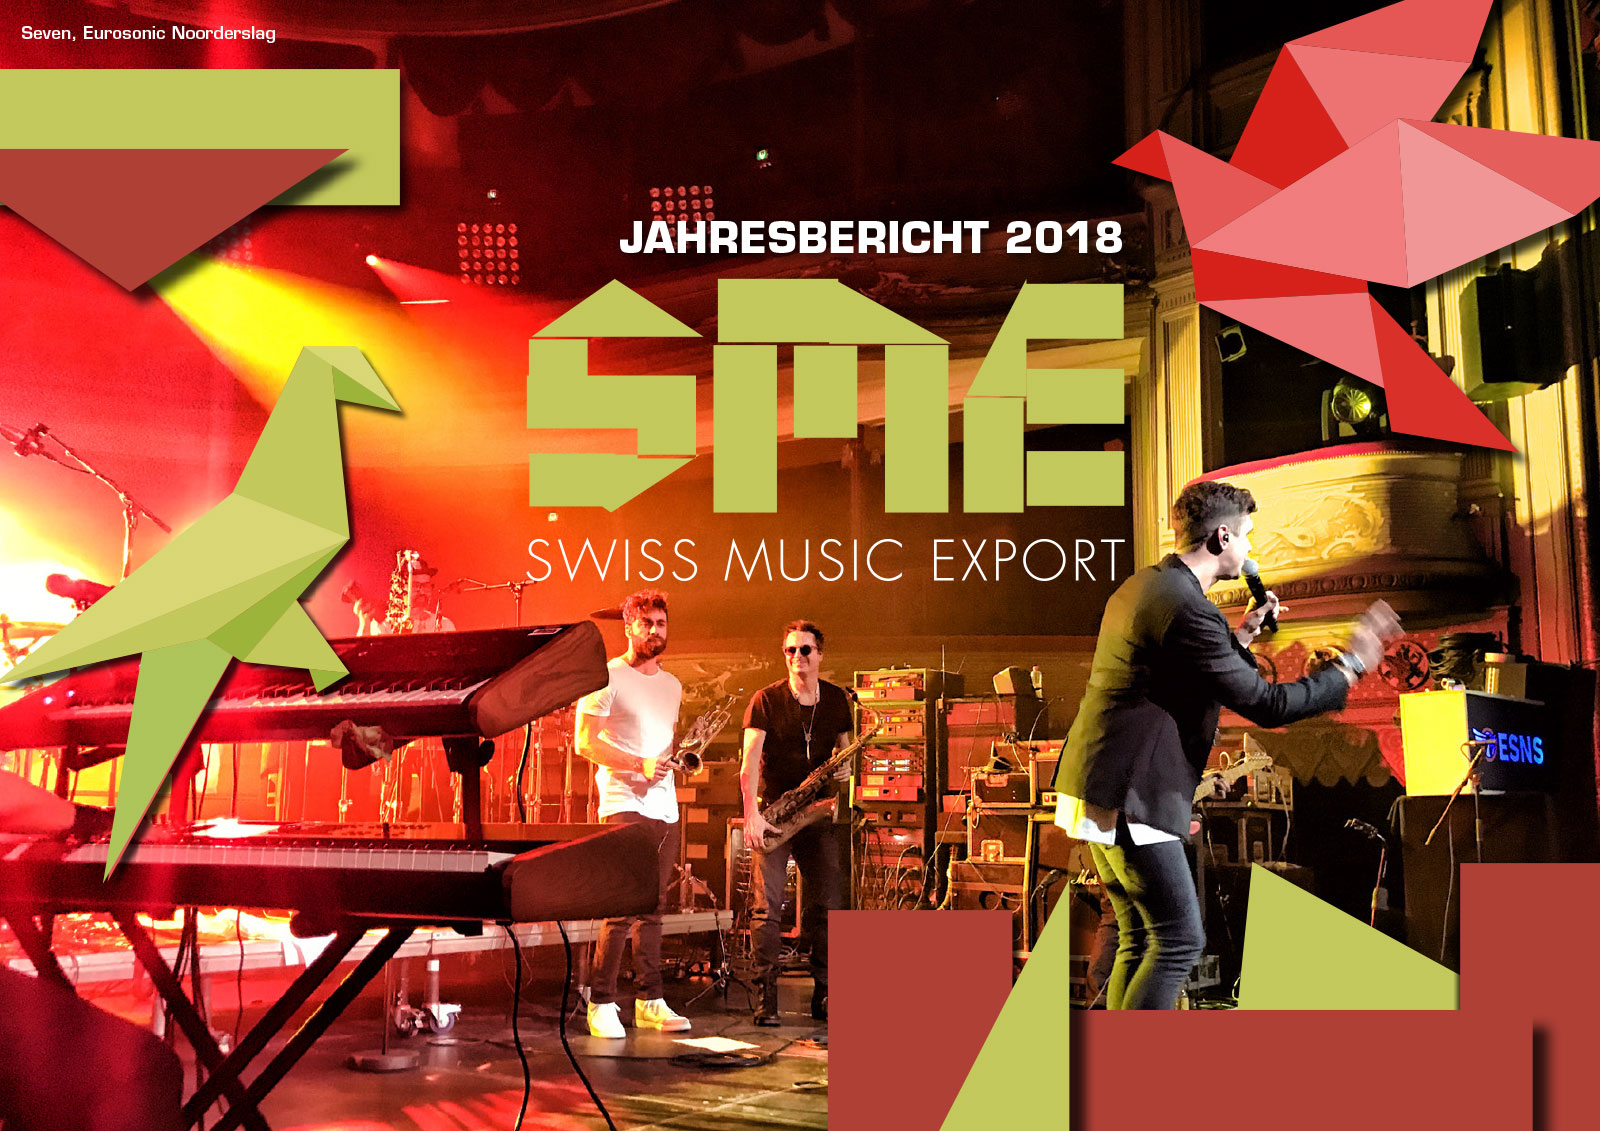 Swiss Music Export – Jahresberichte